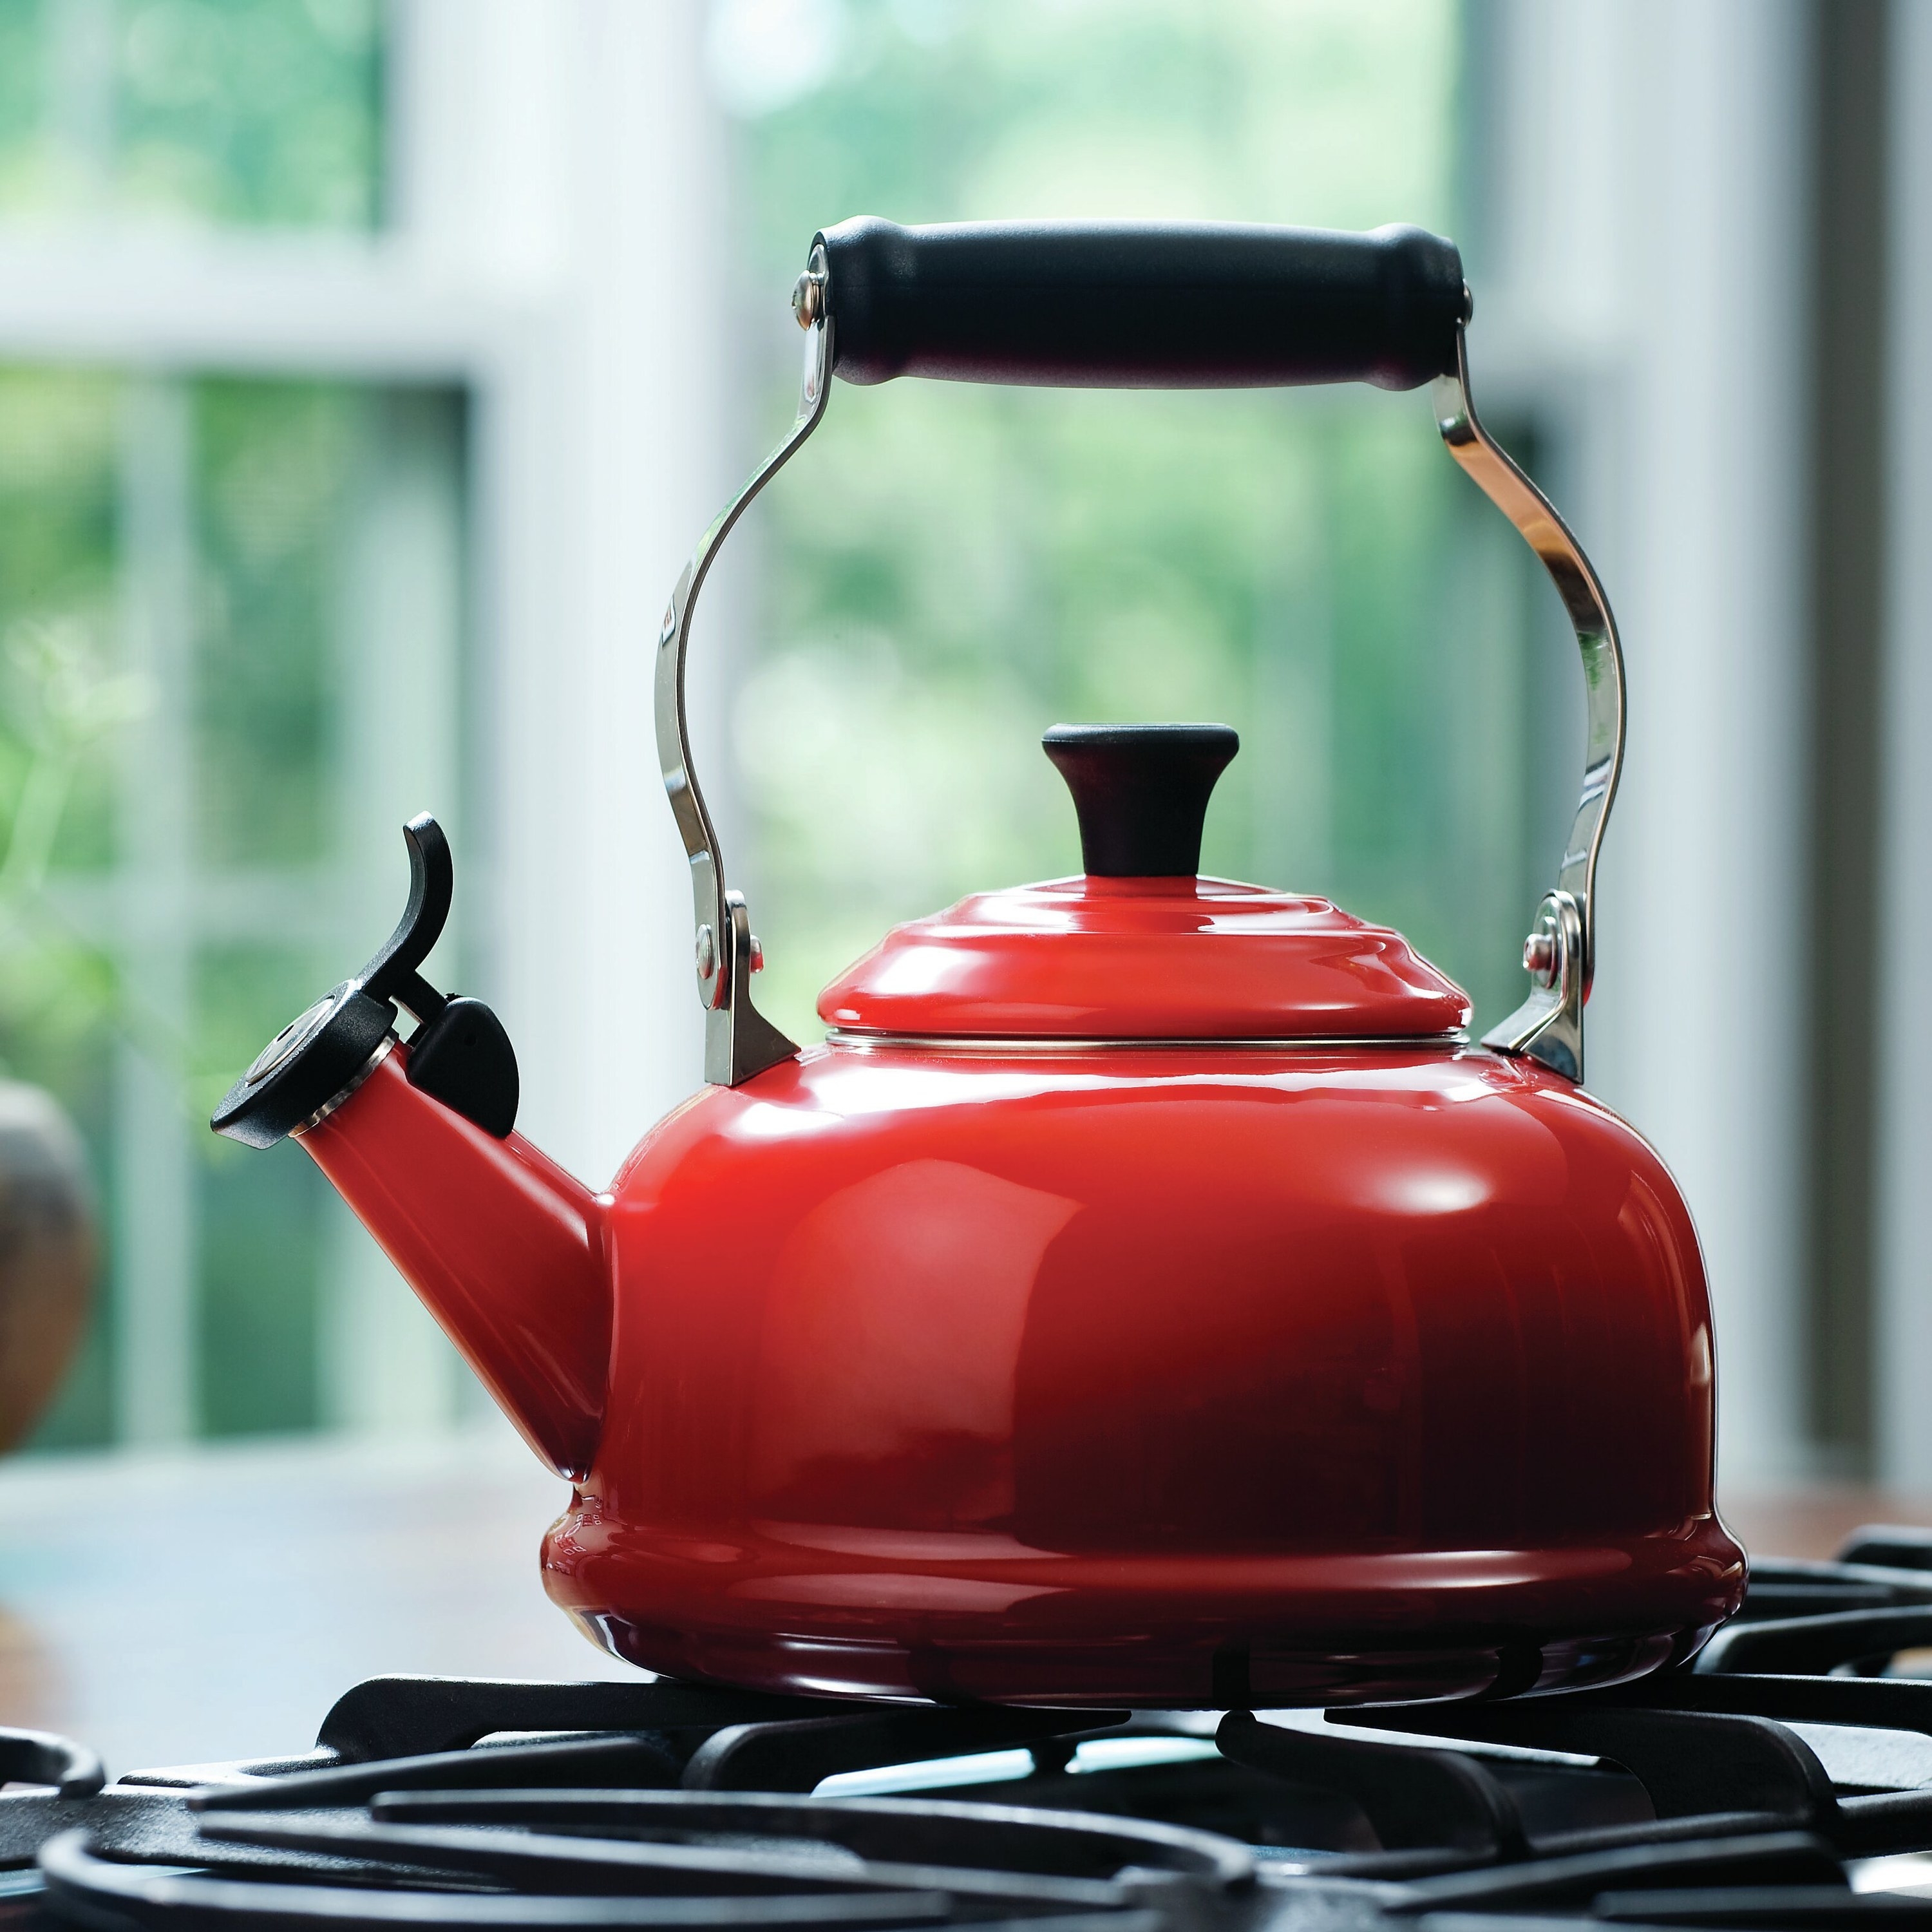 A red tea kettle